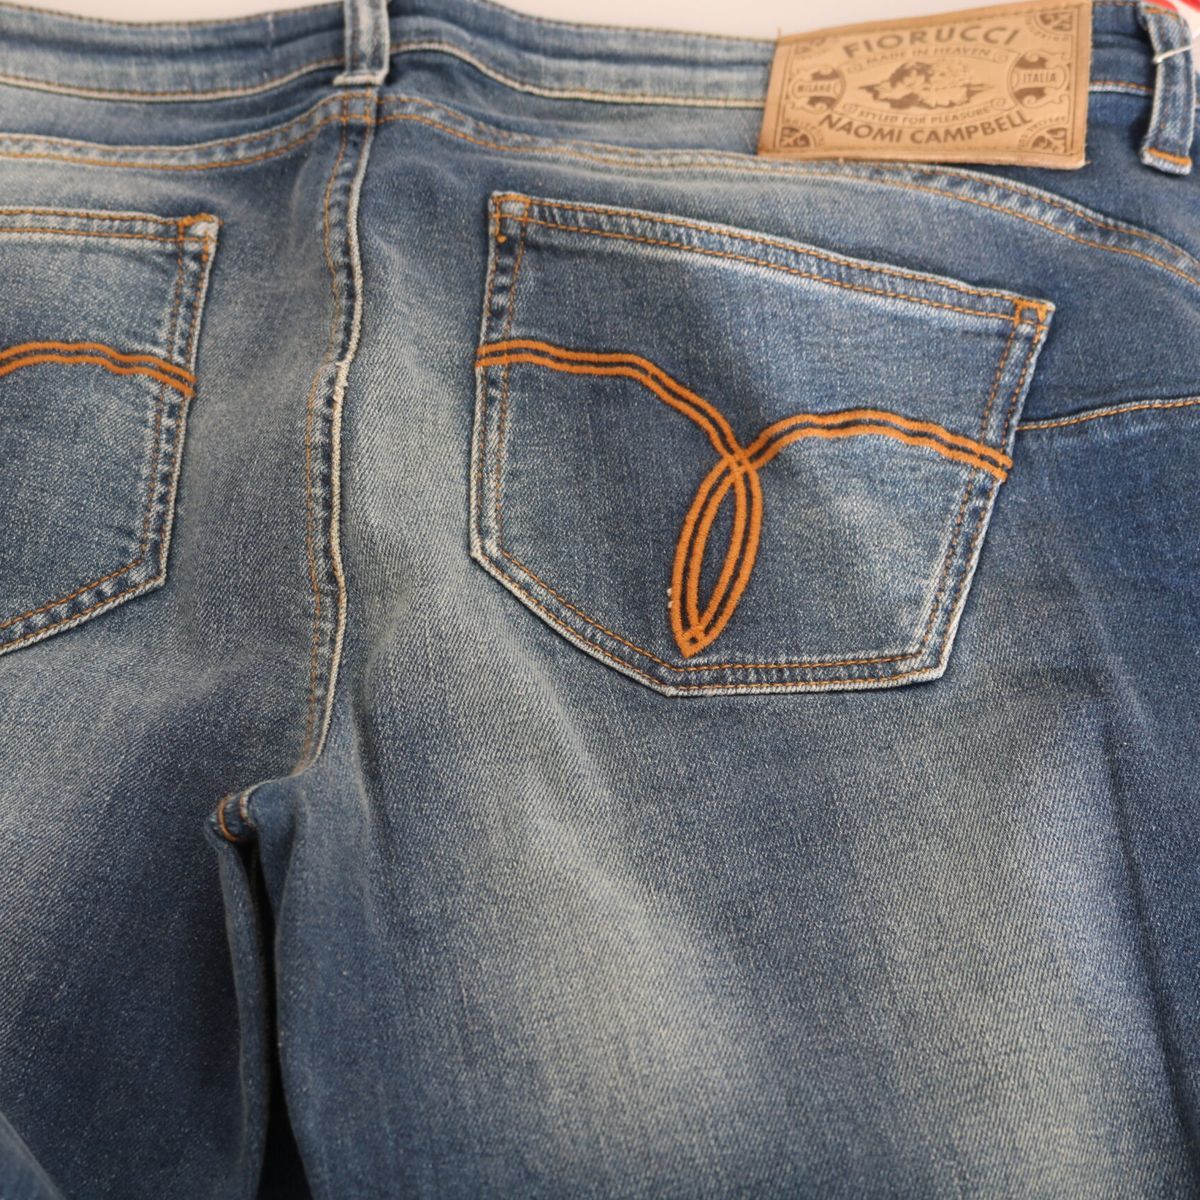 Fiorucci Svelte Mid Waist Slim Jeans in Vintage Blue blue-washed-mid-waist-slim-fit-denim-jeans